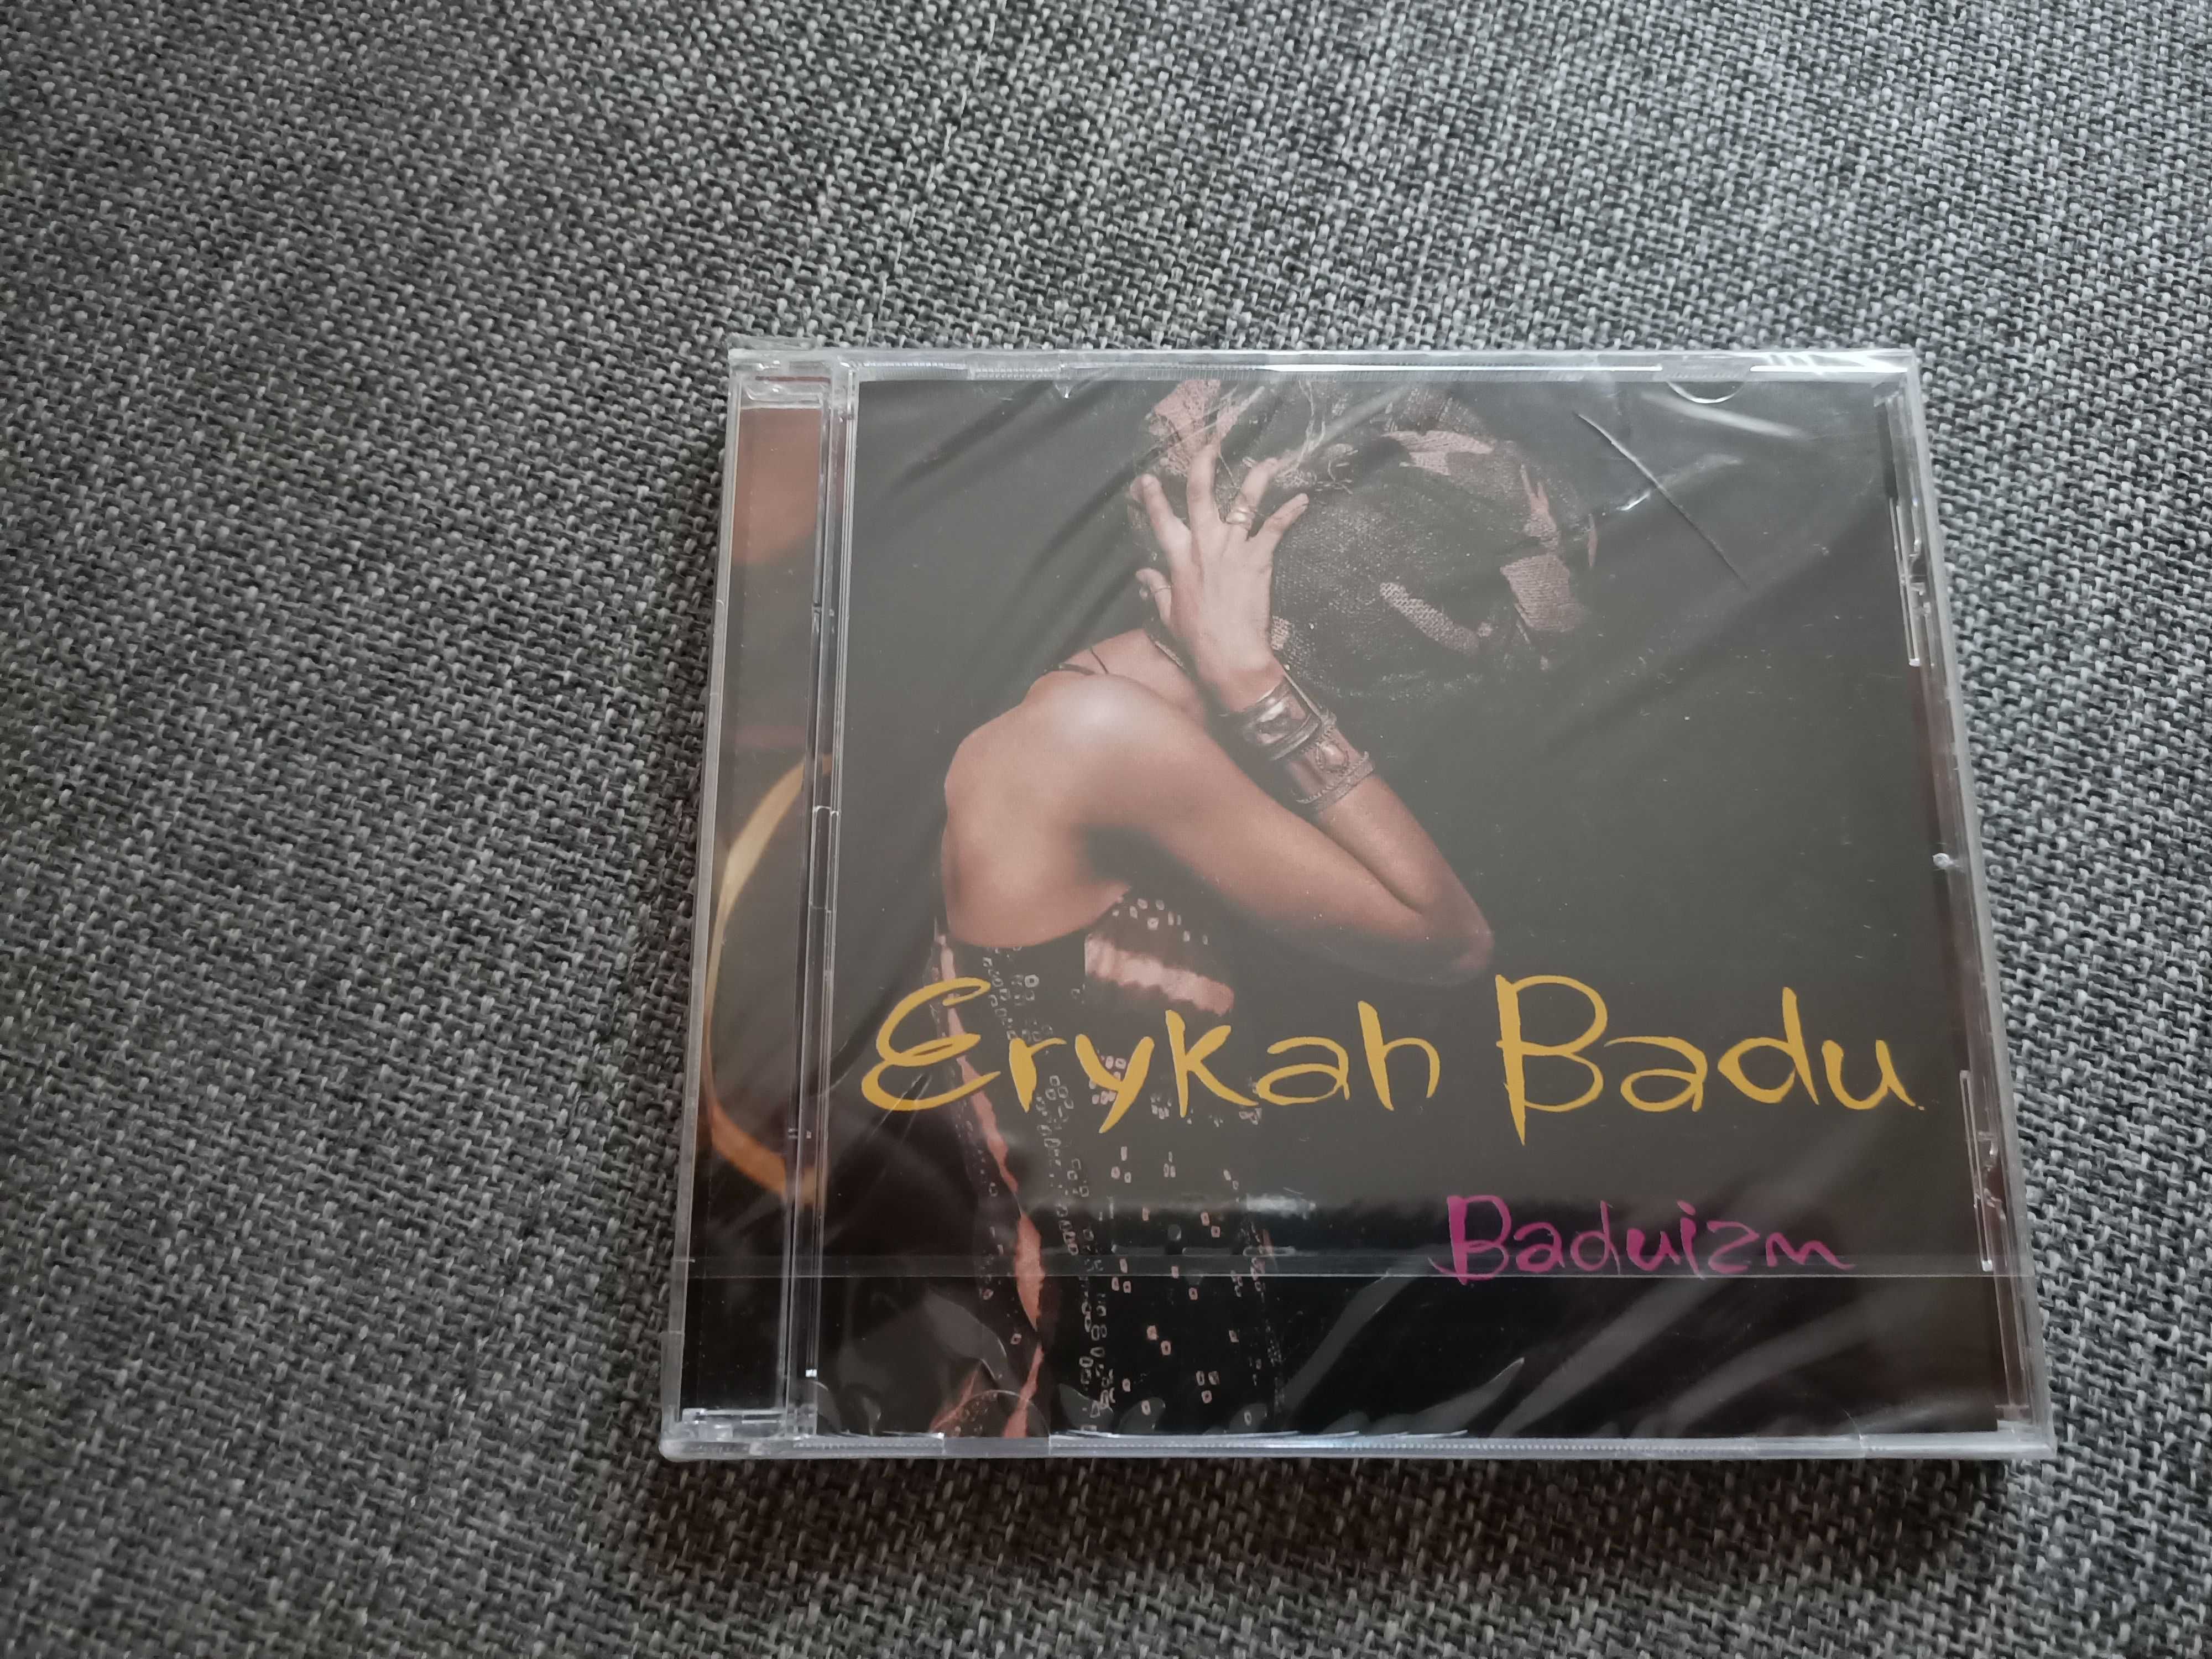 Erykah Badu - Baduizm - CD, nowa, folia